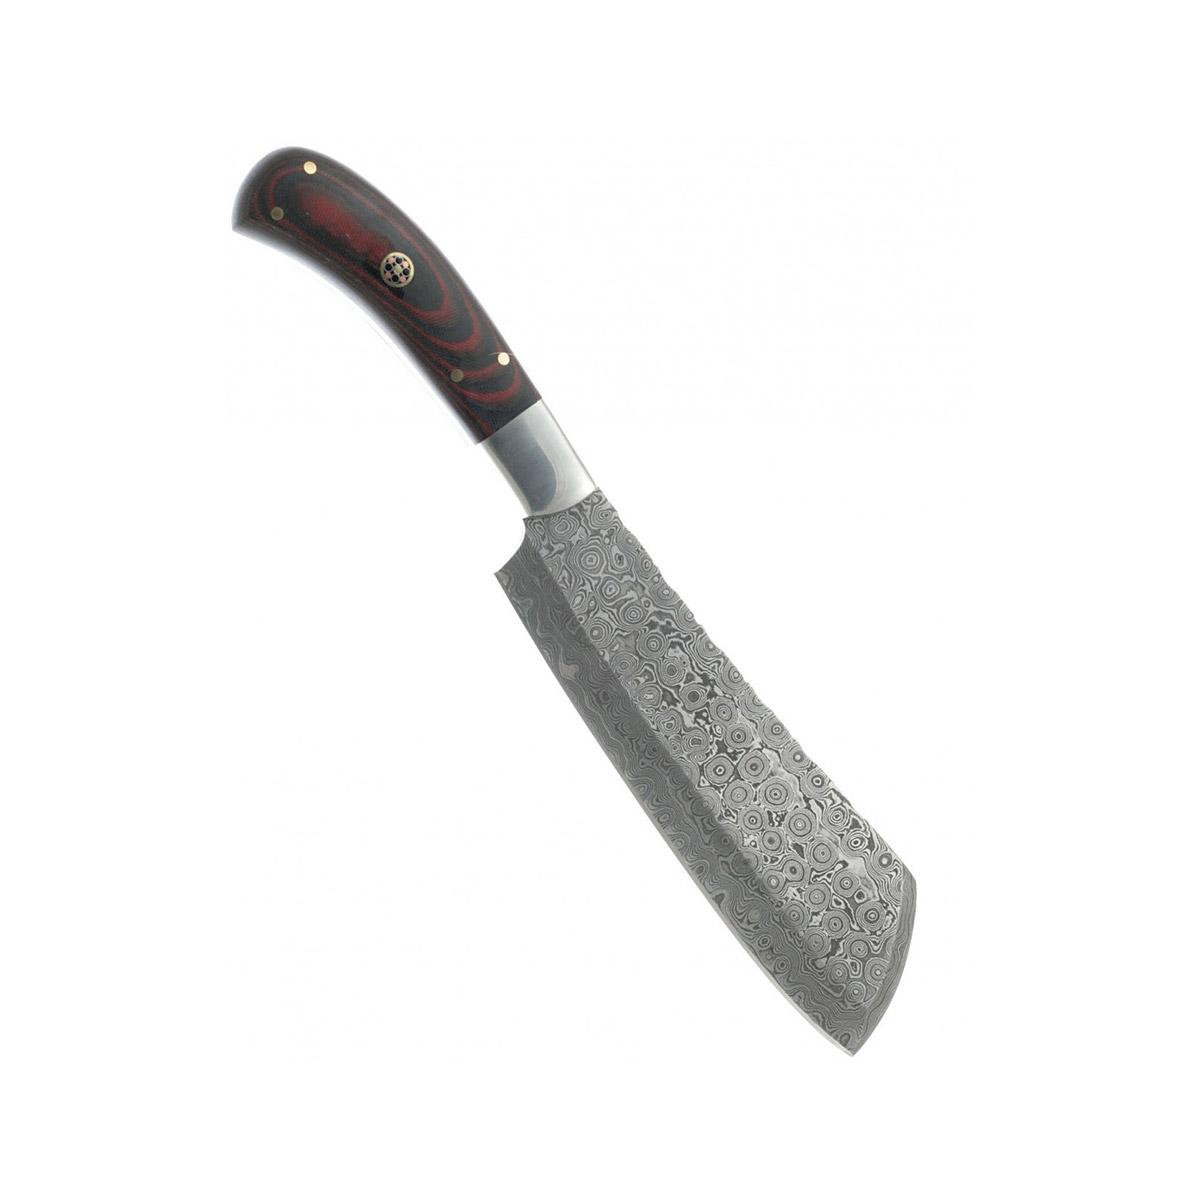  Big Kitchen Butcher Knife